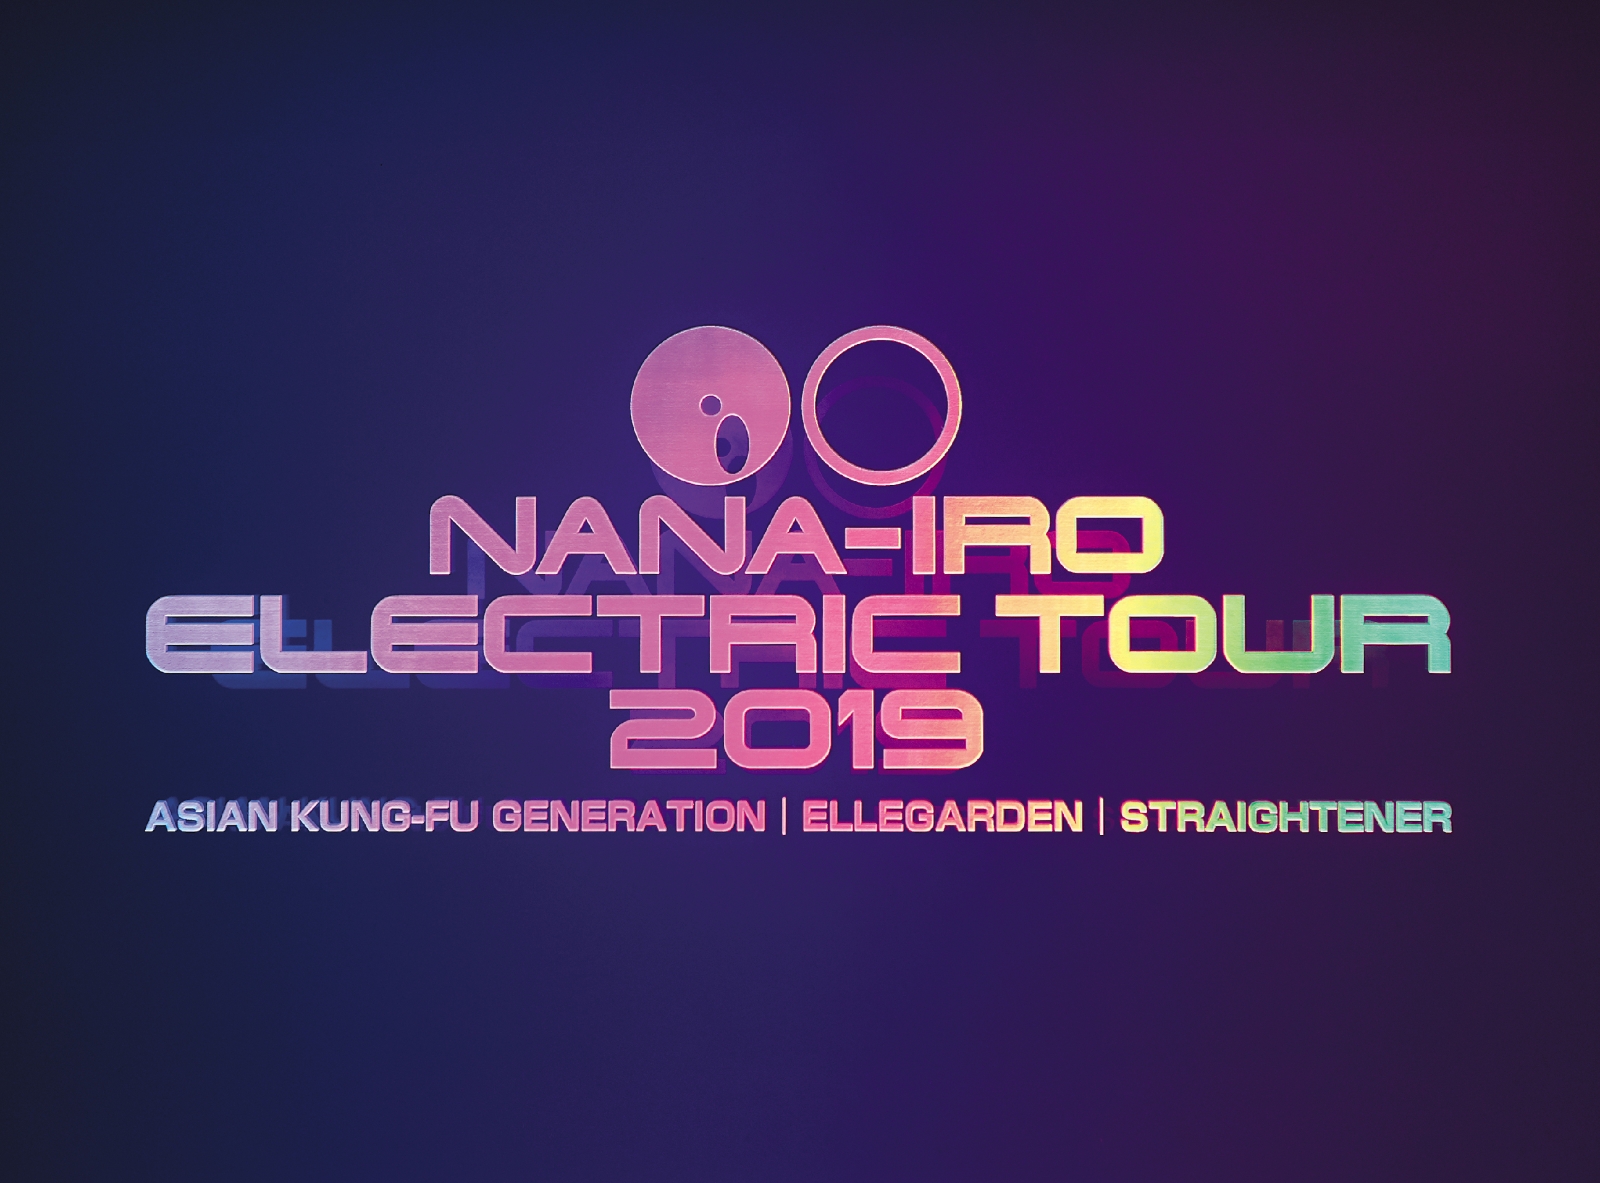 楽天ブックス: NANA-IRO ELECTRIC TOUR 2019 (初回生産限定盤 Blu-ray + PHOTO  BOOOK)【Blu-ray】 - ASIAN KUNG-FU GENERATION, ELLEGARDEN, STRAIGHTENER -  4547366460476 : DVD